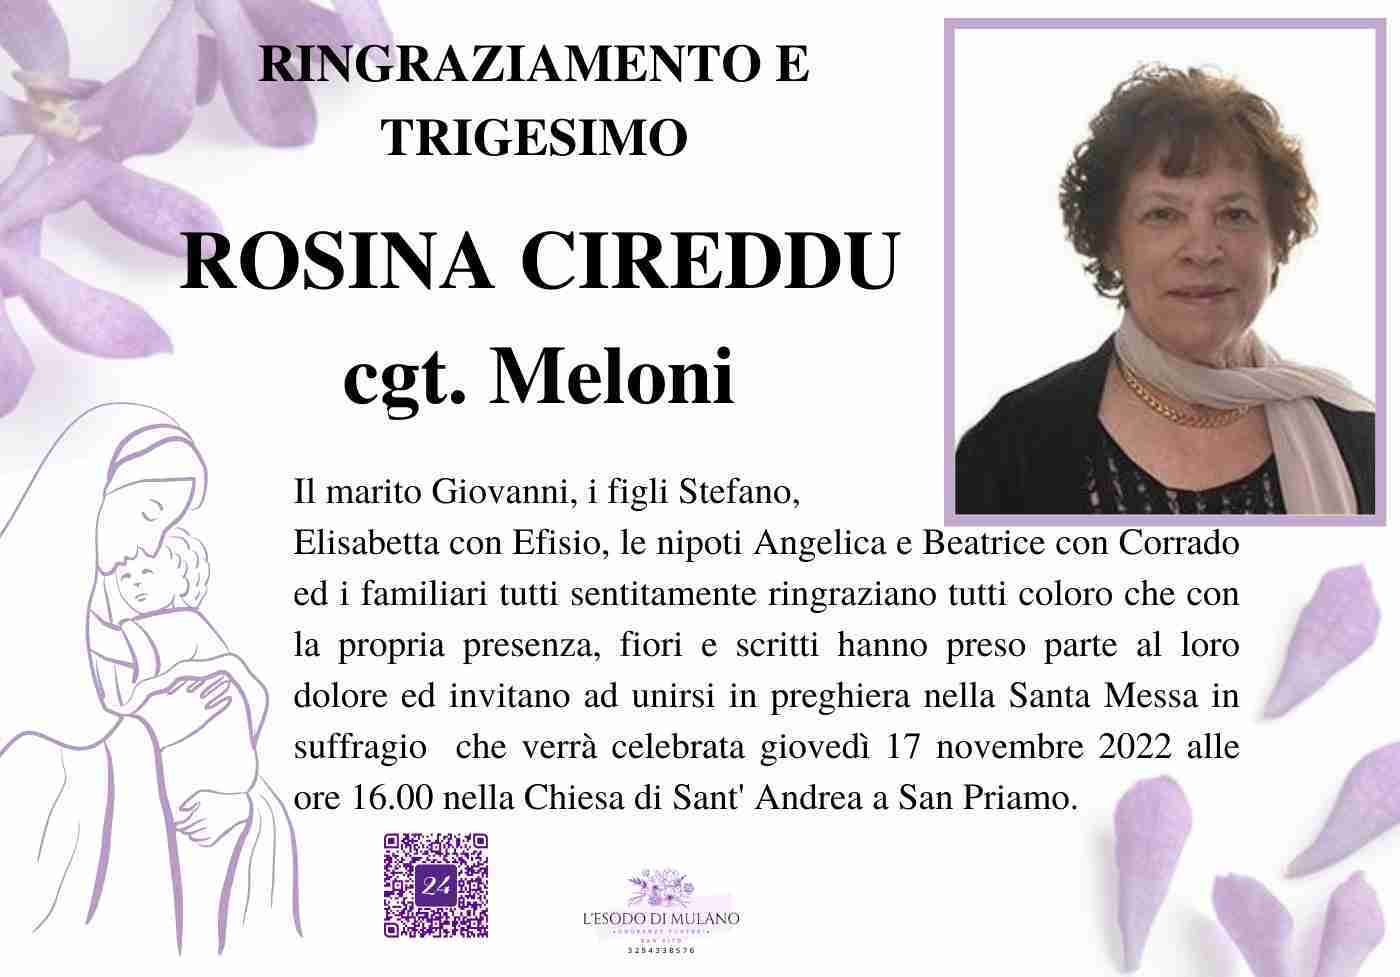 Rosina Cireddu